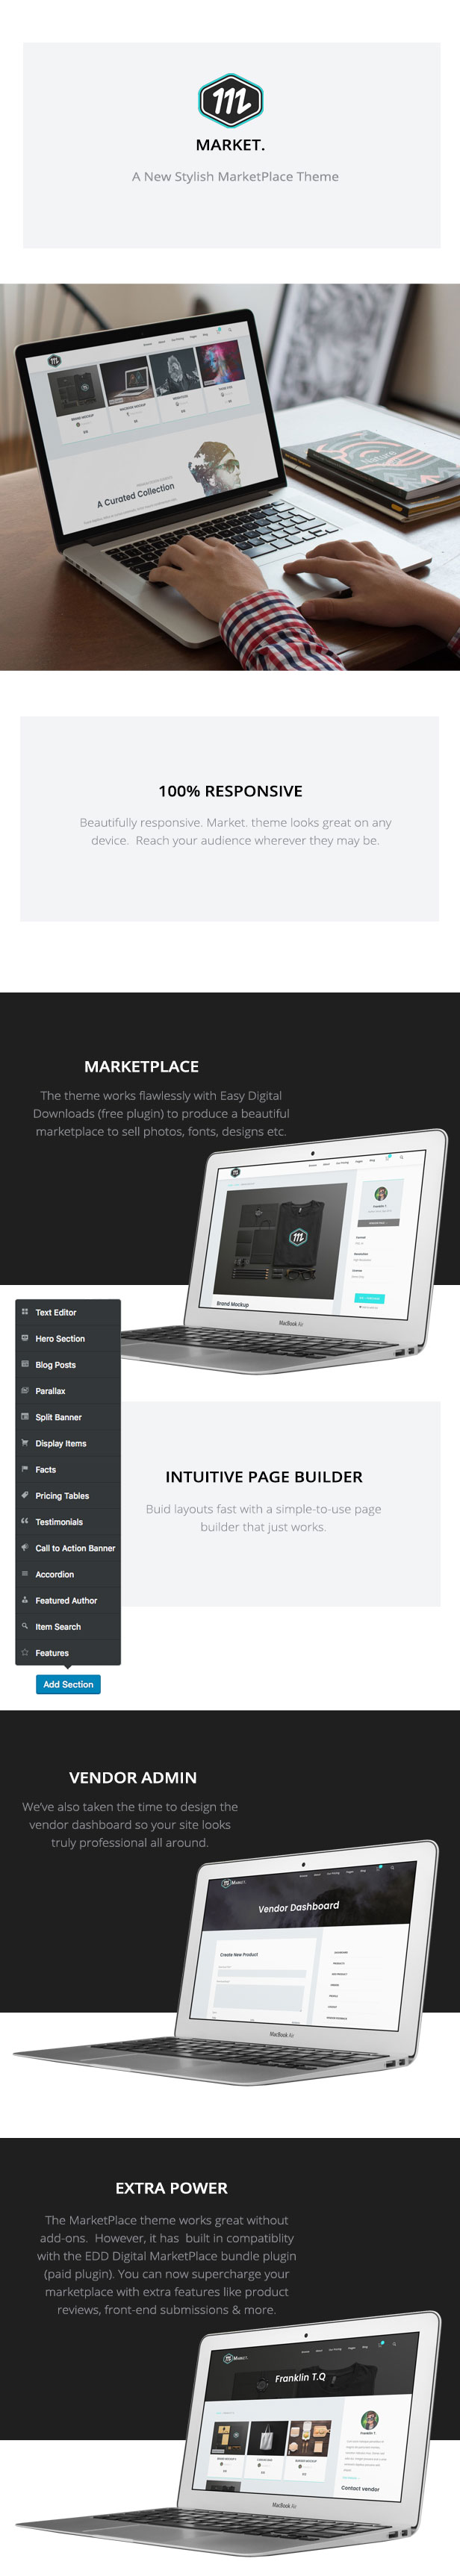 Market - Marketplace WordPress Theme - 1